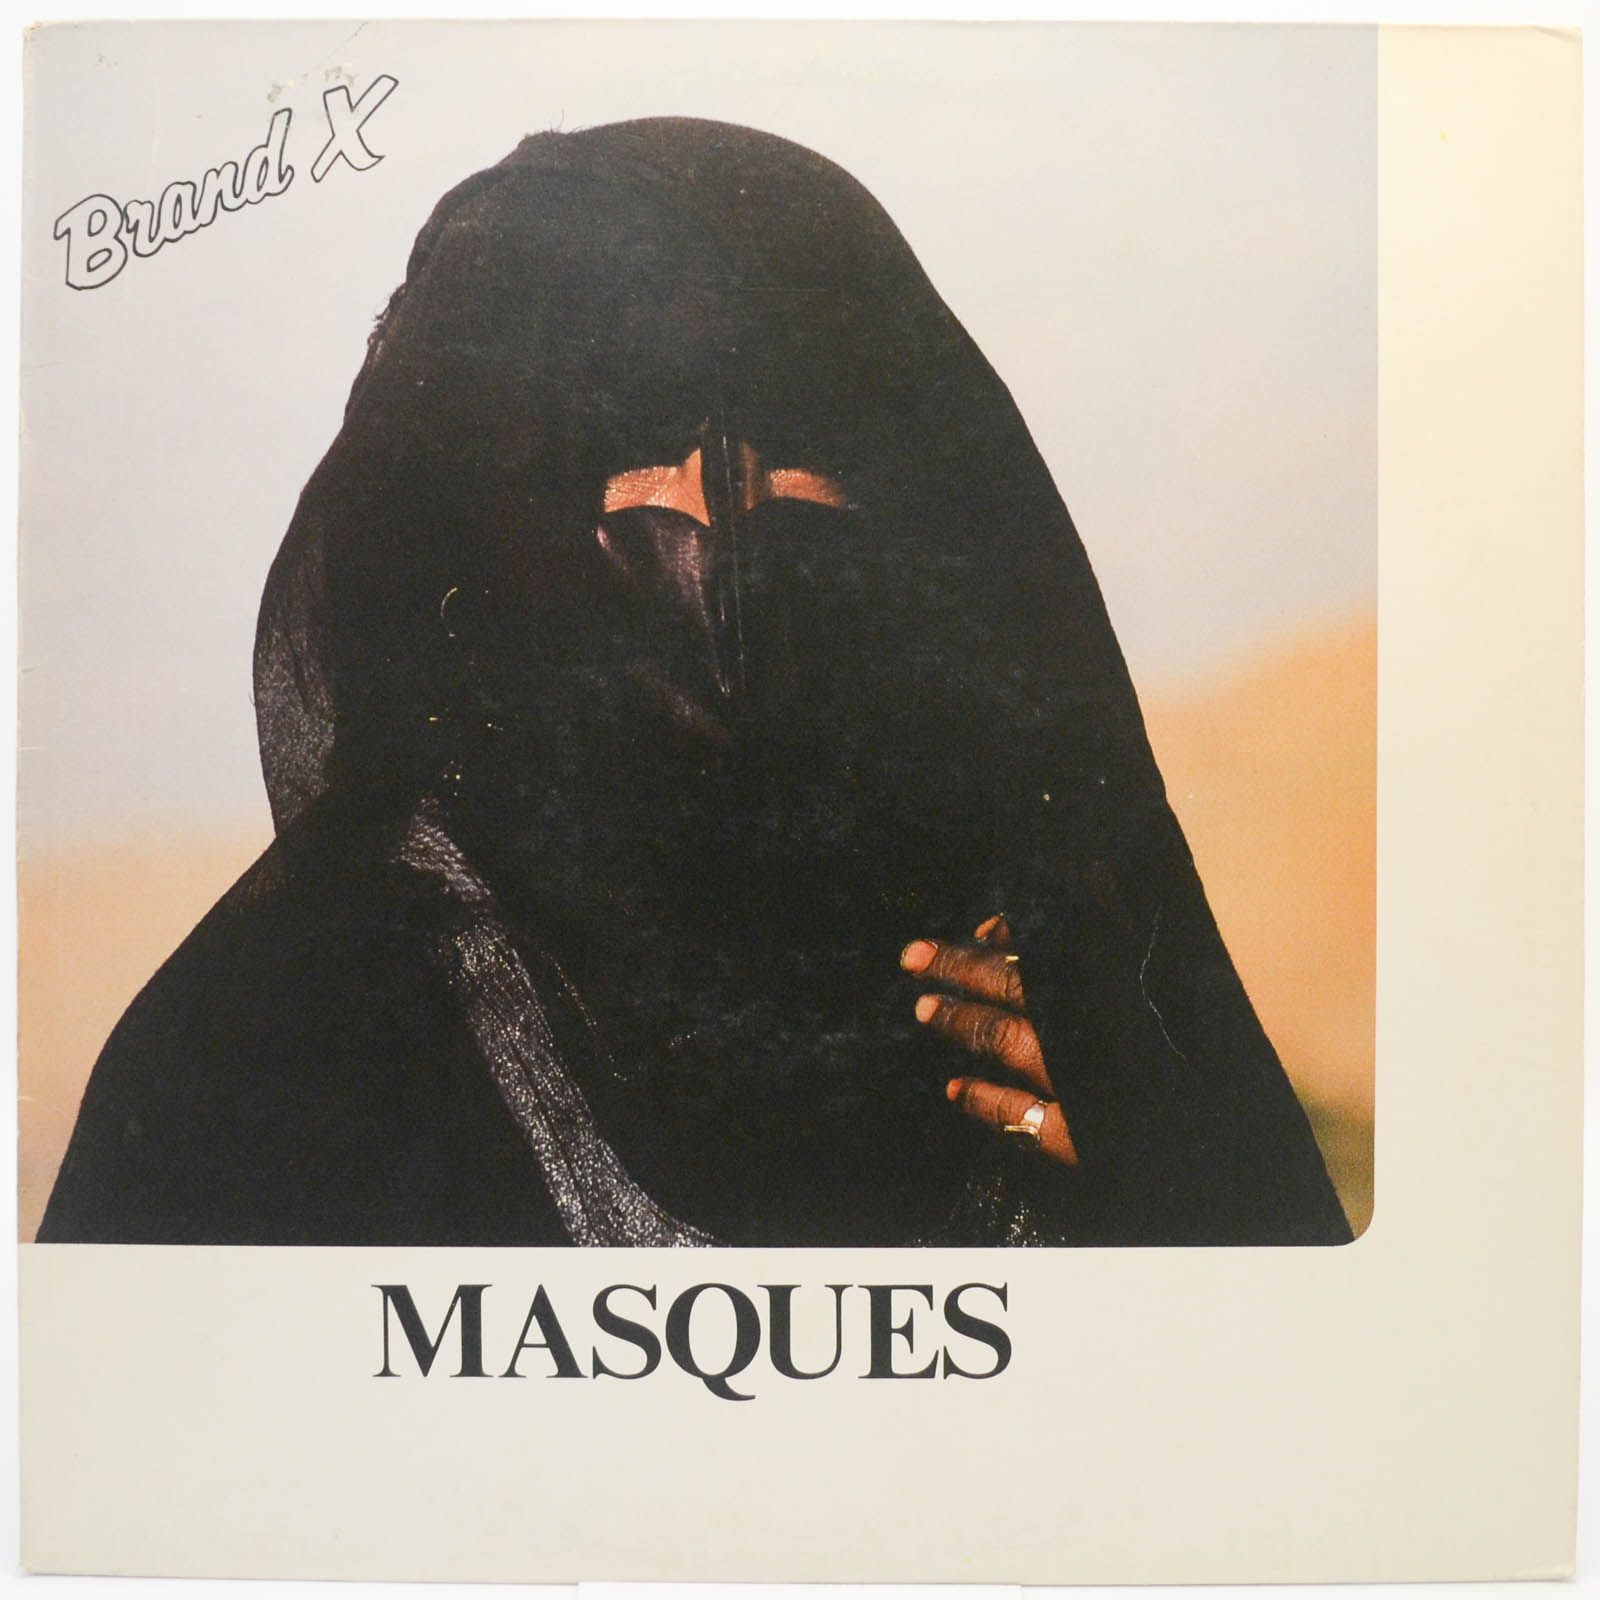 Brand X — Masques (UK), 1978